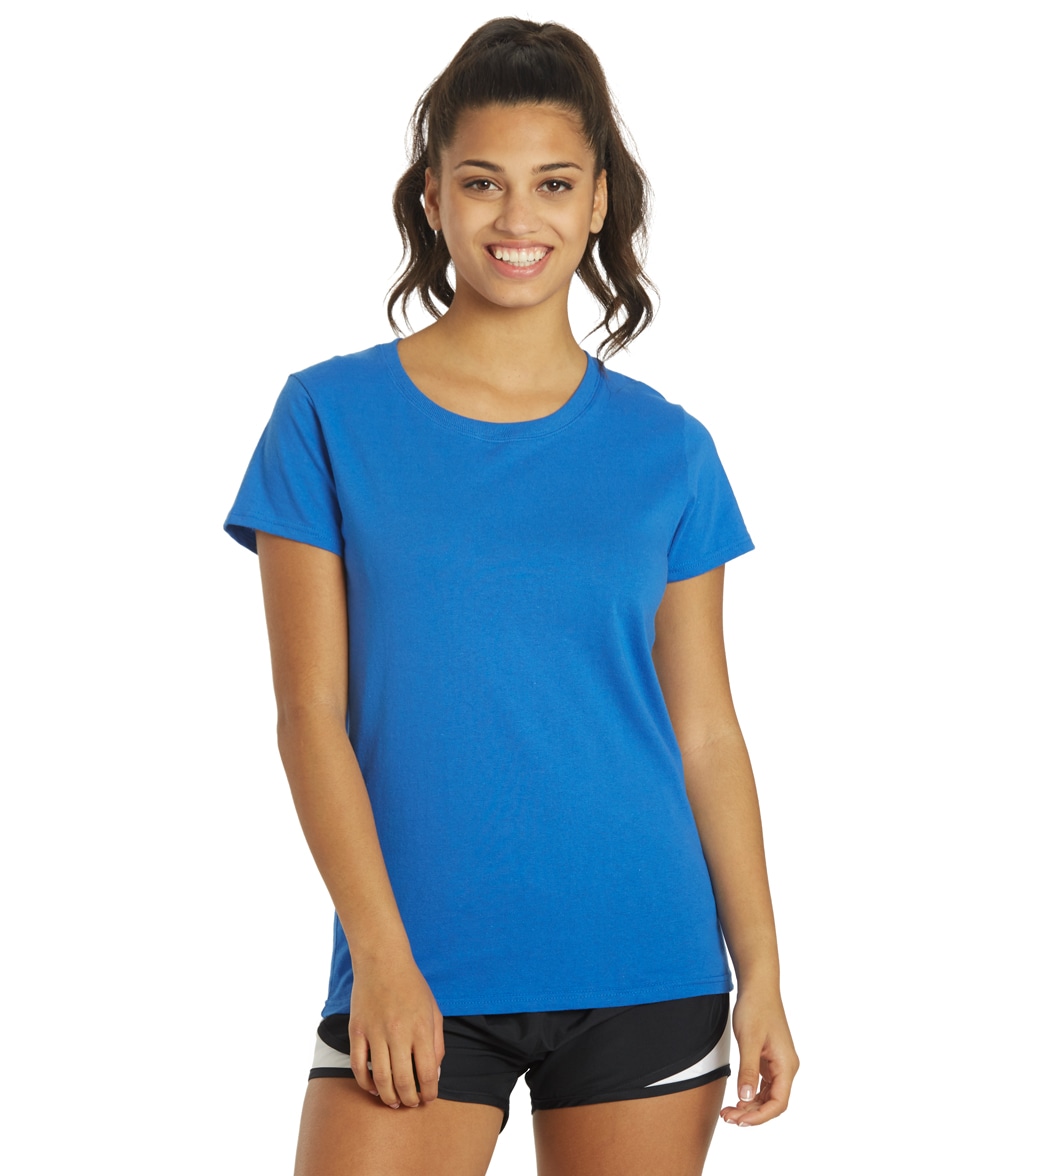 Women's Cotton Missy Fit T-Shirt - Royal Medium Size Medium - Swimoutlet.com